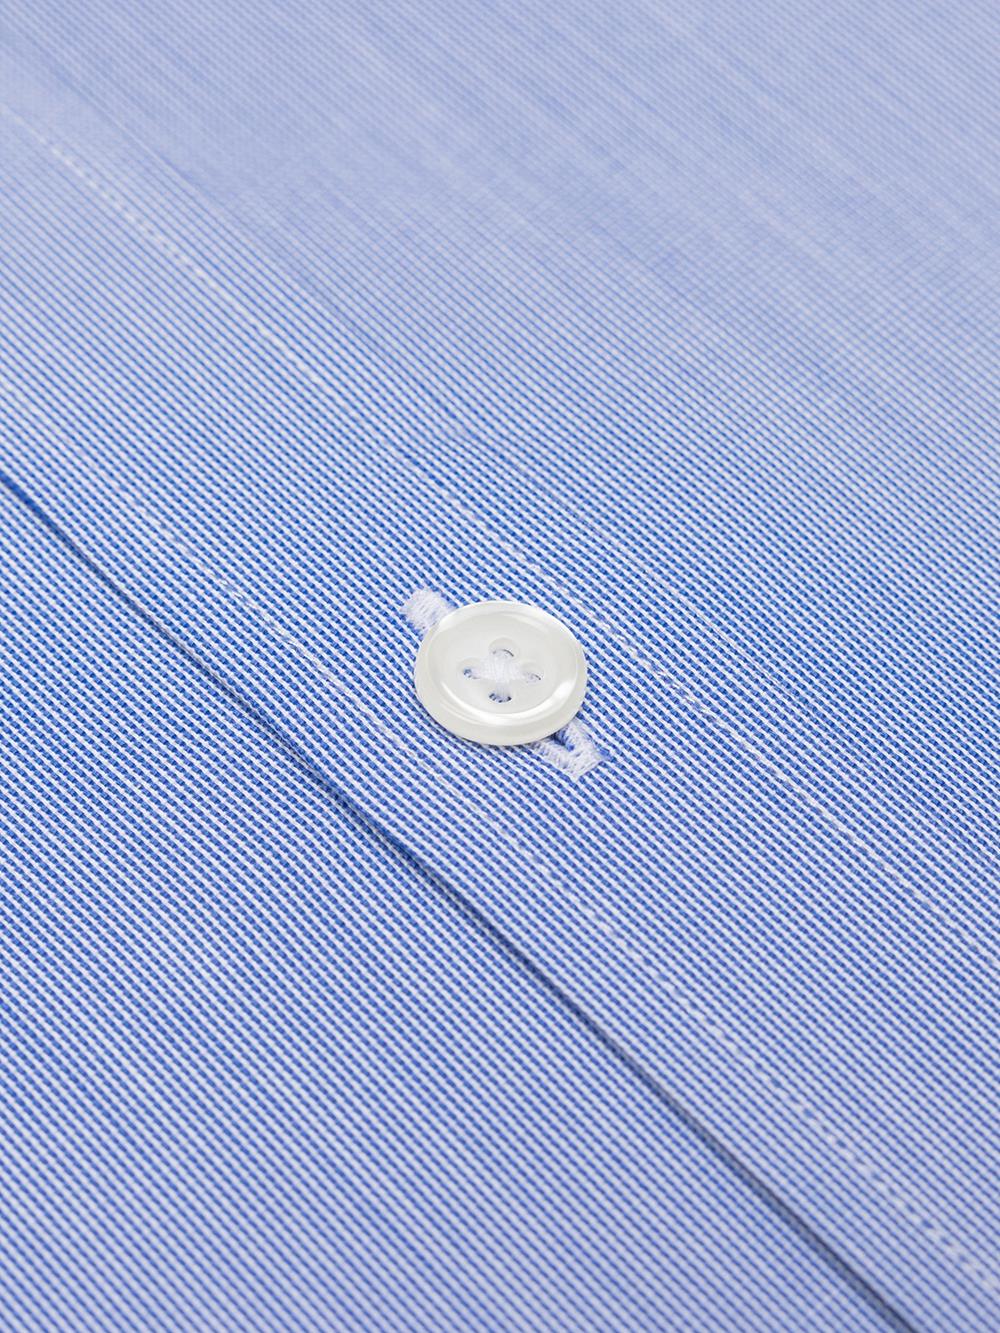 Thousand Stripes Blue Shirt - Button down collar